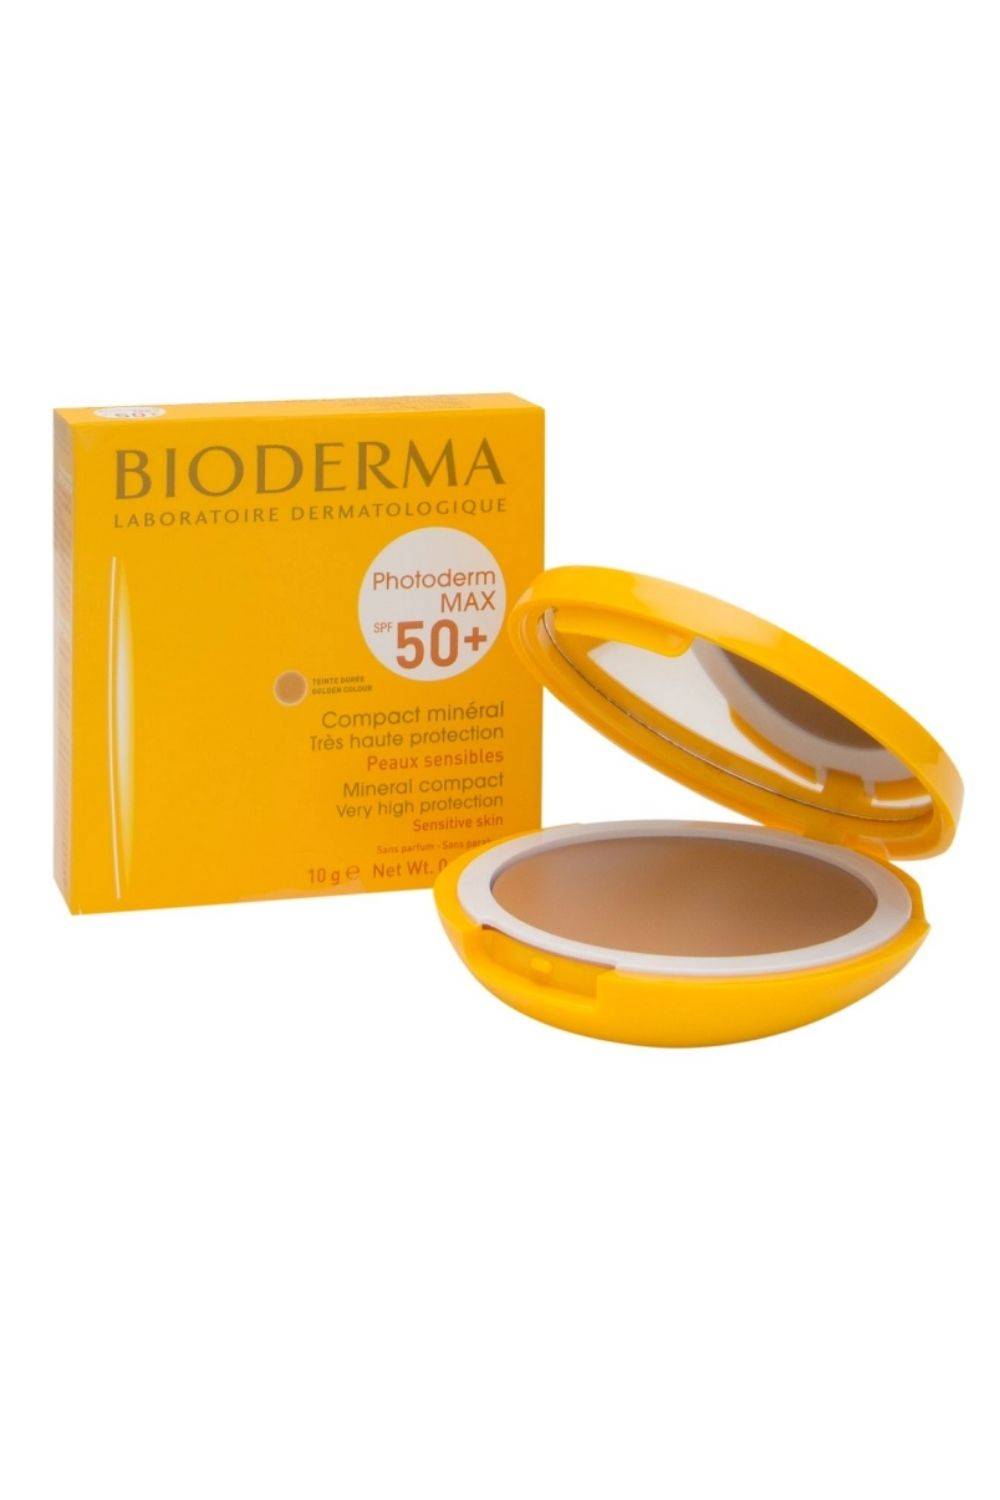 Bioderma photoderm Max SPF50+ maquillaje compacto